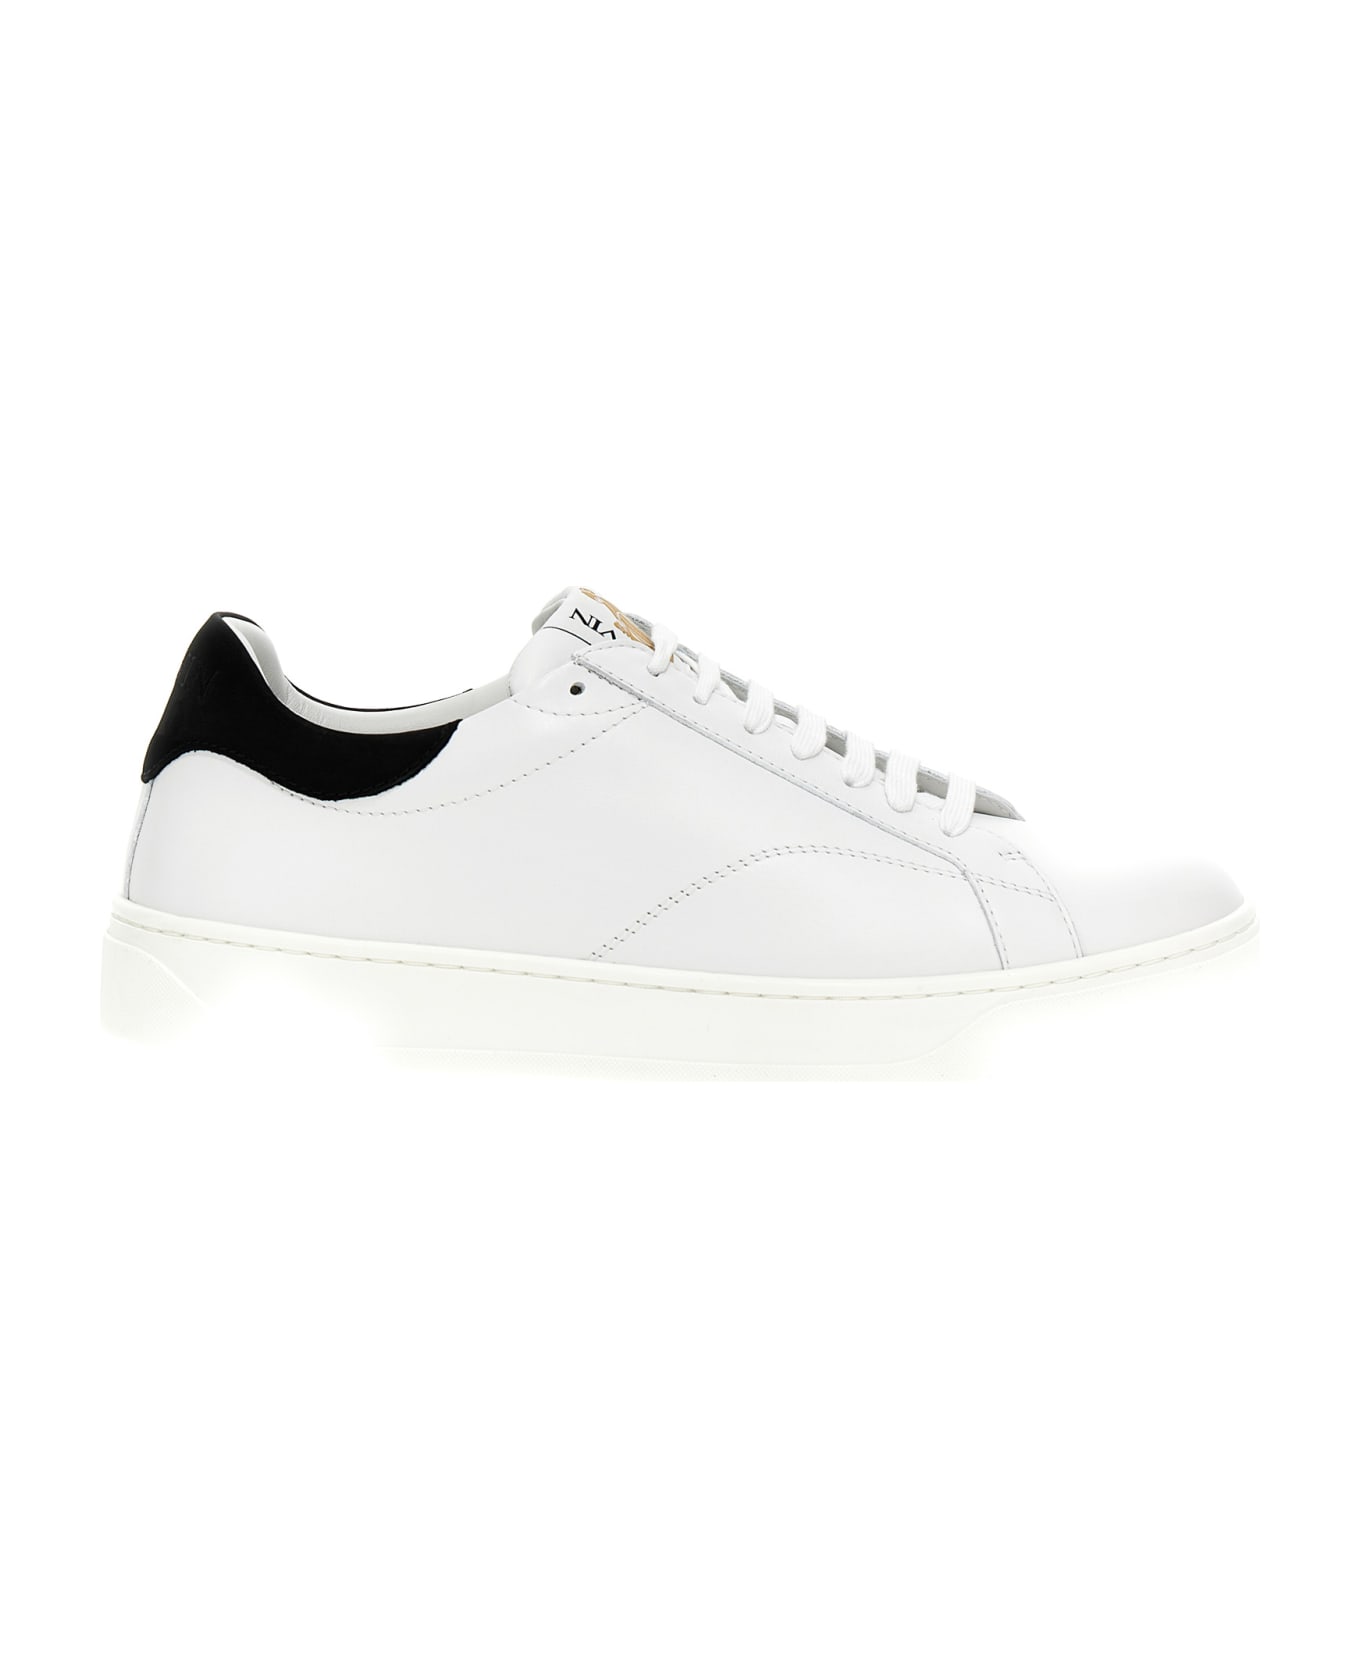 Lanvin 'ddb0' Sneakers - White Black